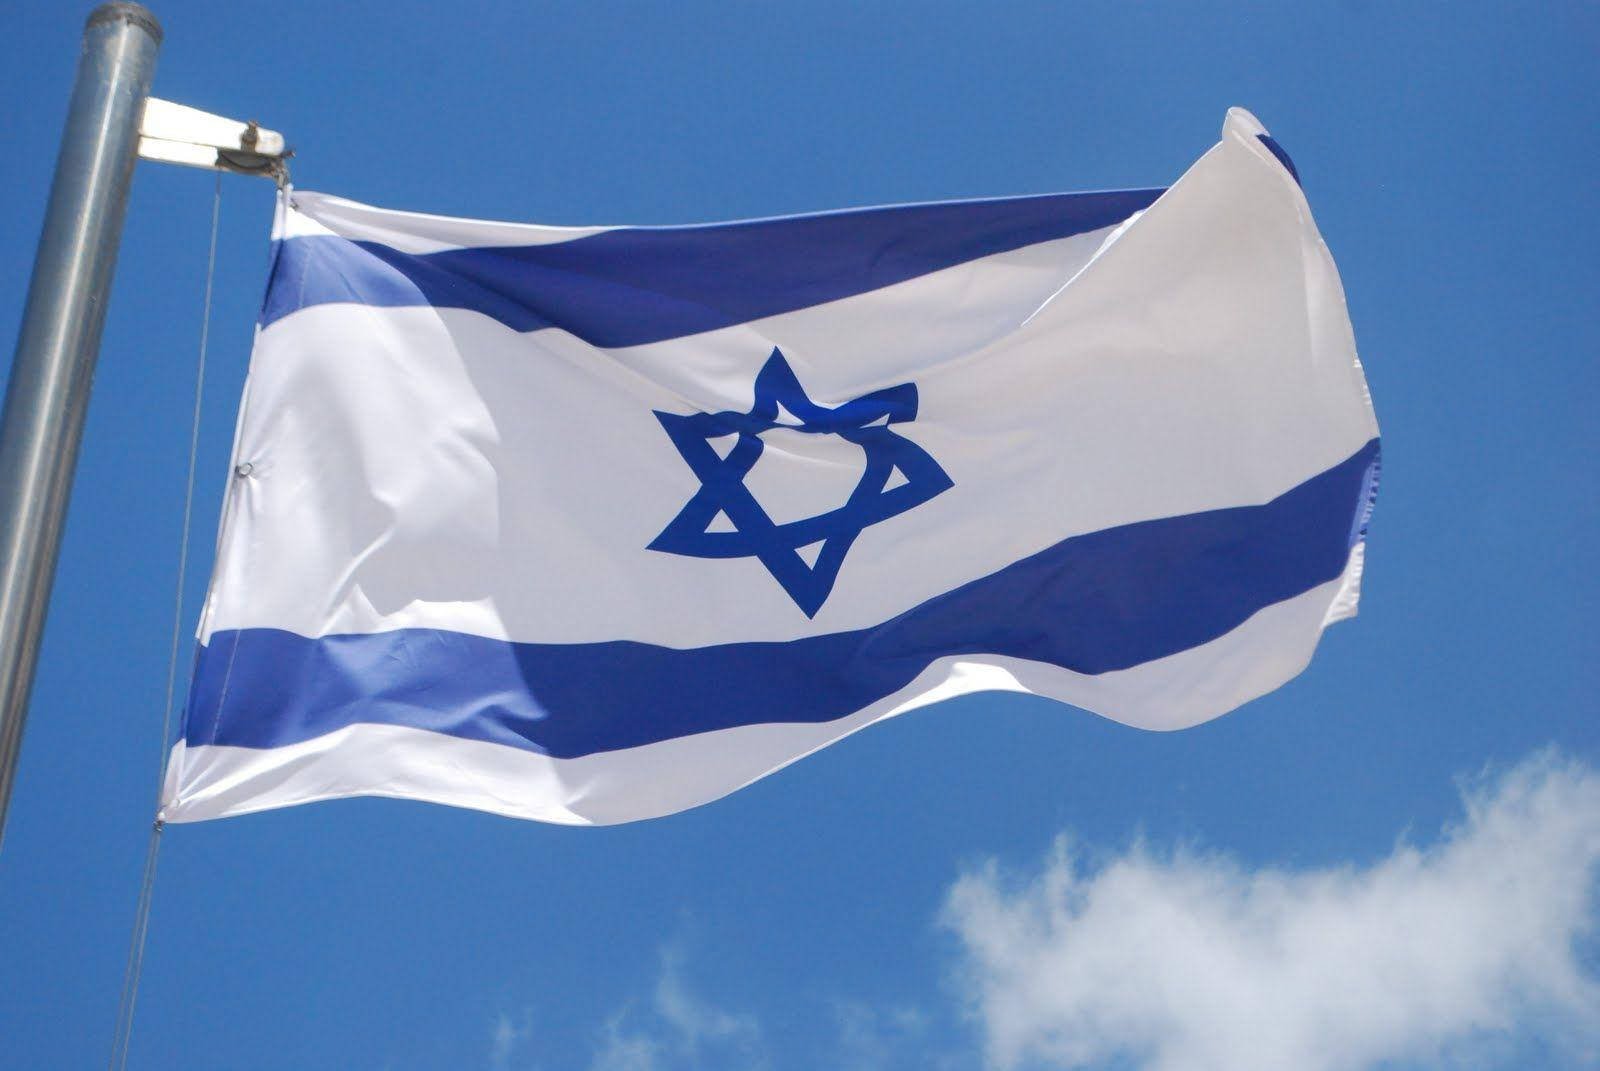 israel-flag-waving-in-the-wind-pdolg1dnbzkimemj.jpg